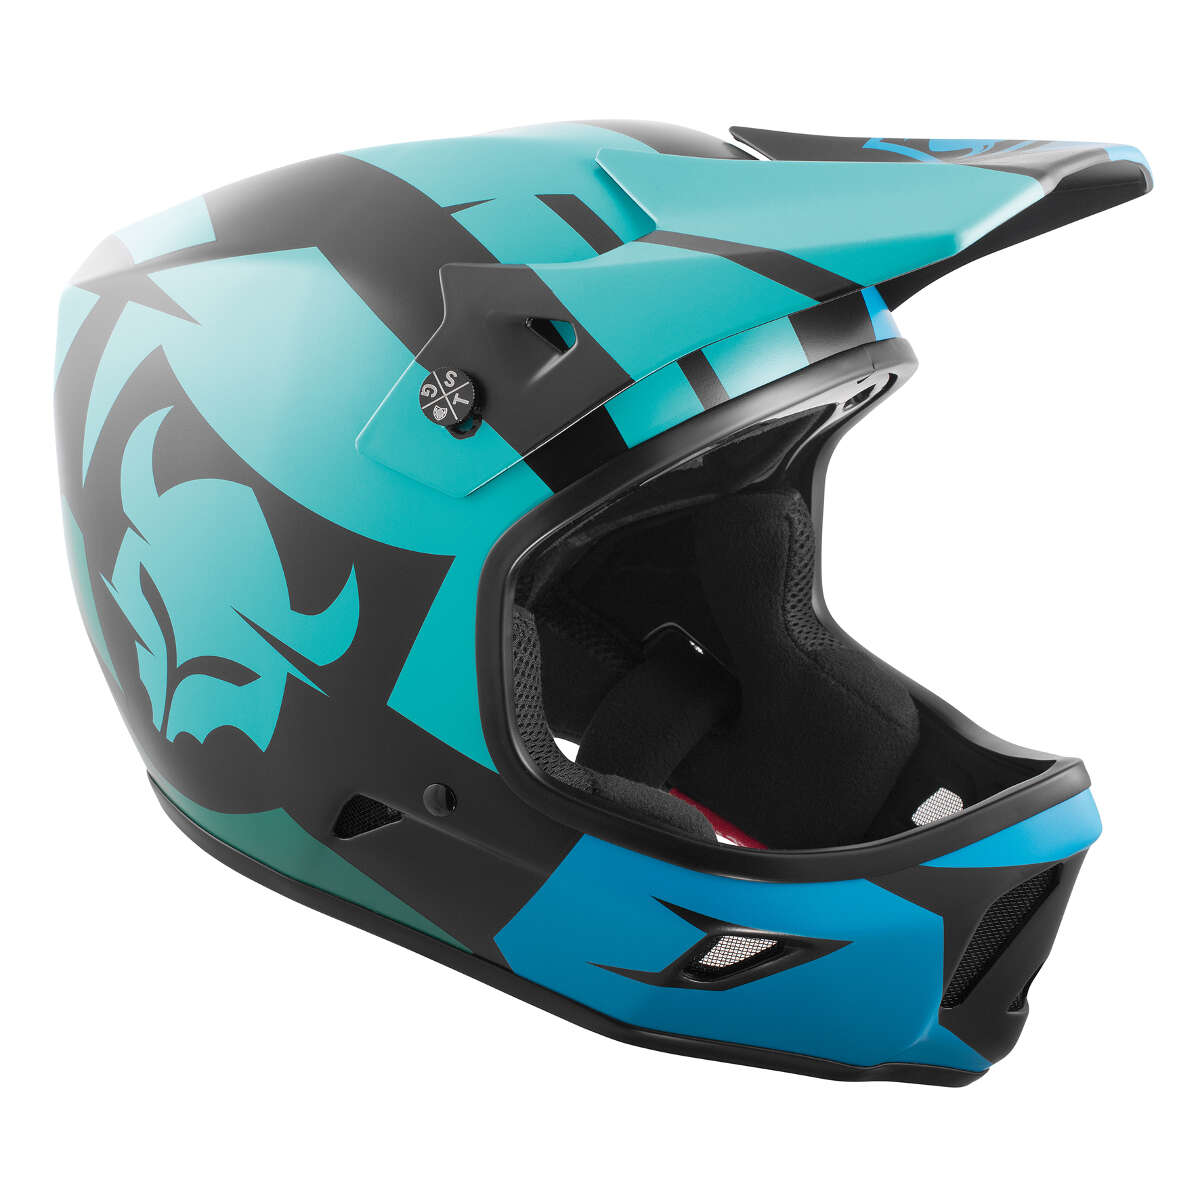 TSG Downhill MTB Helmet Advance Graphic Design - Interval Green Blue